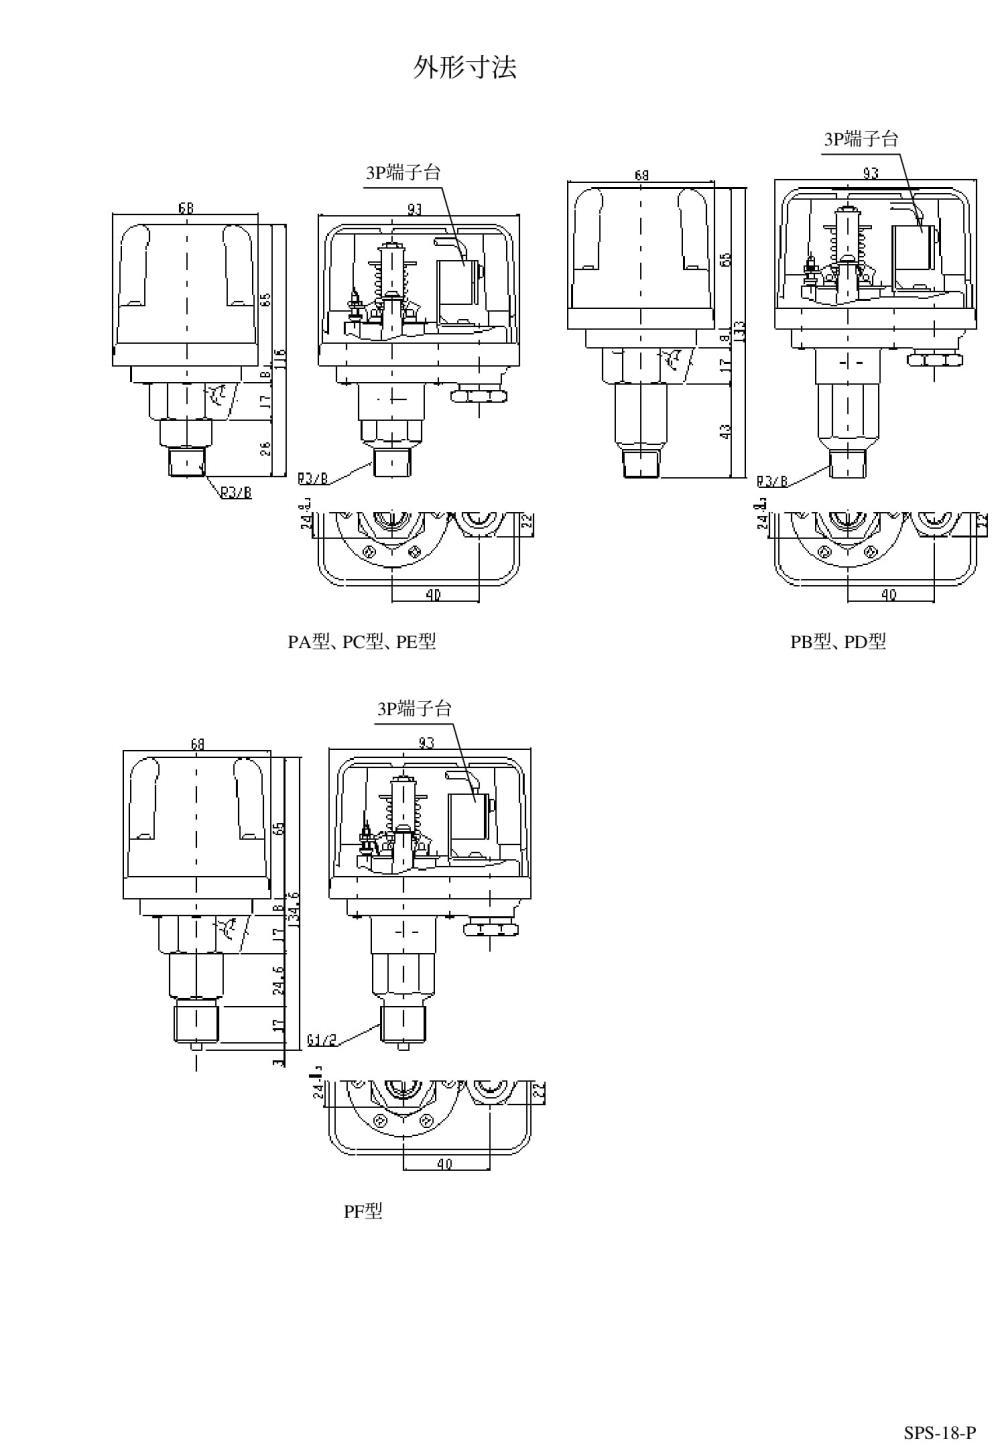 SANWA DENKI Pressure Switch SPS-18-P-A, C3604BD Series